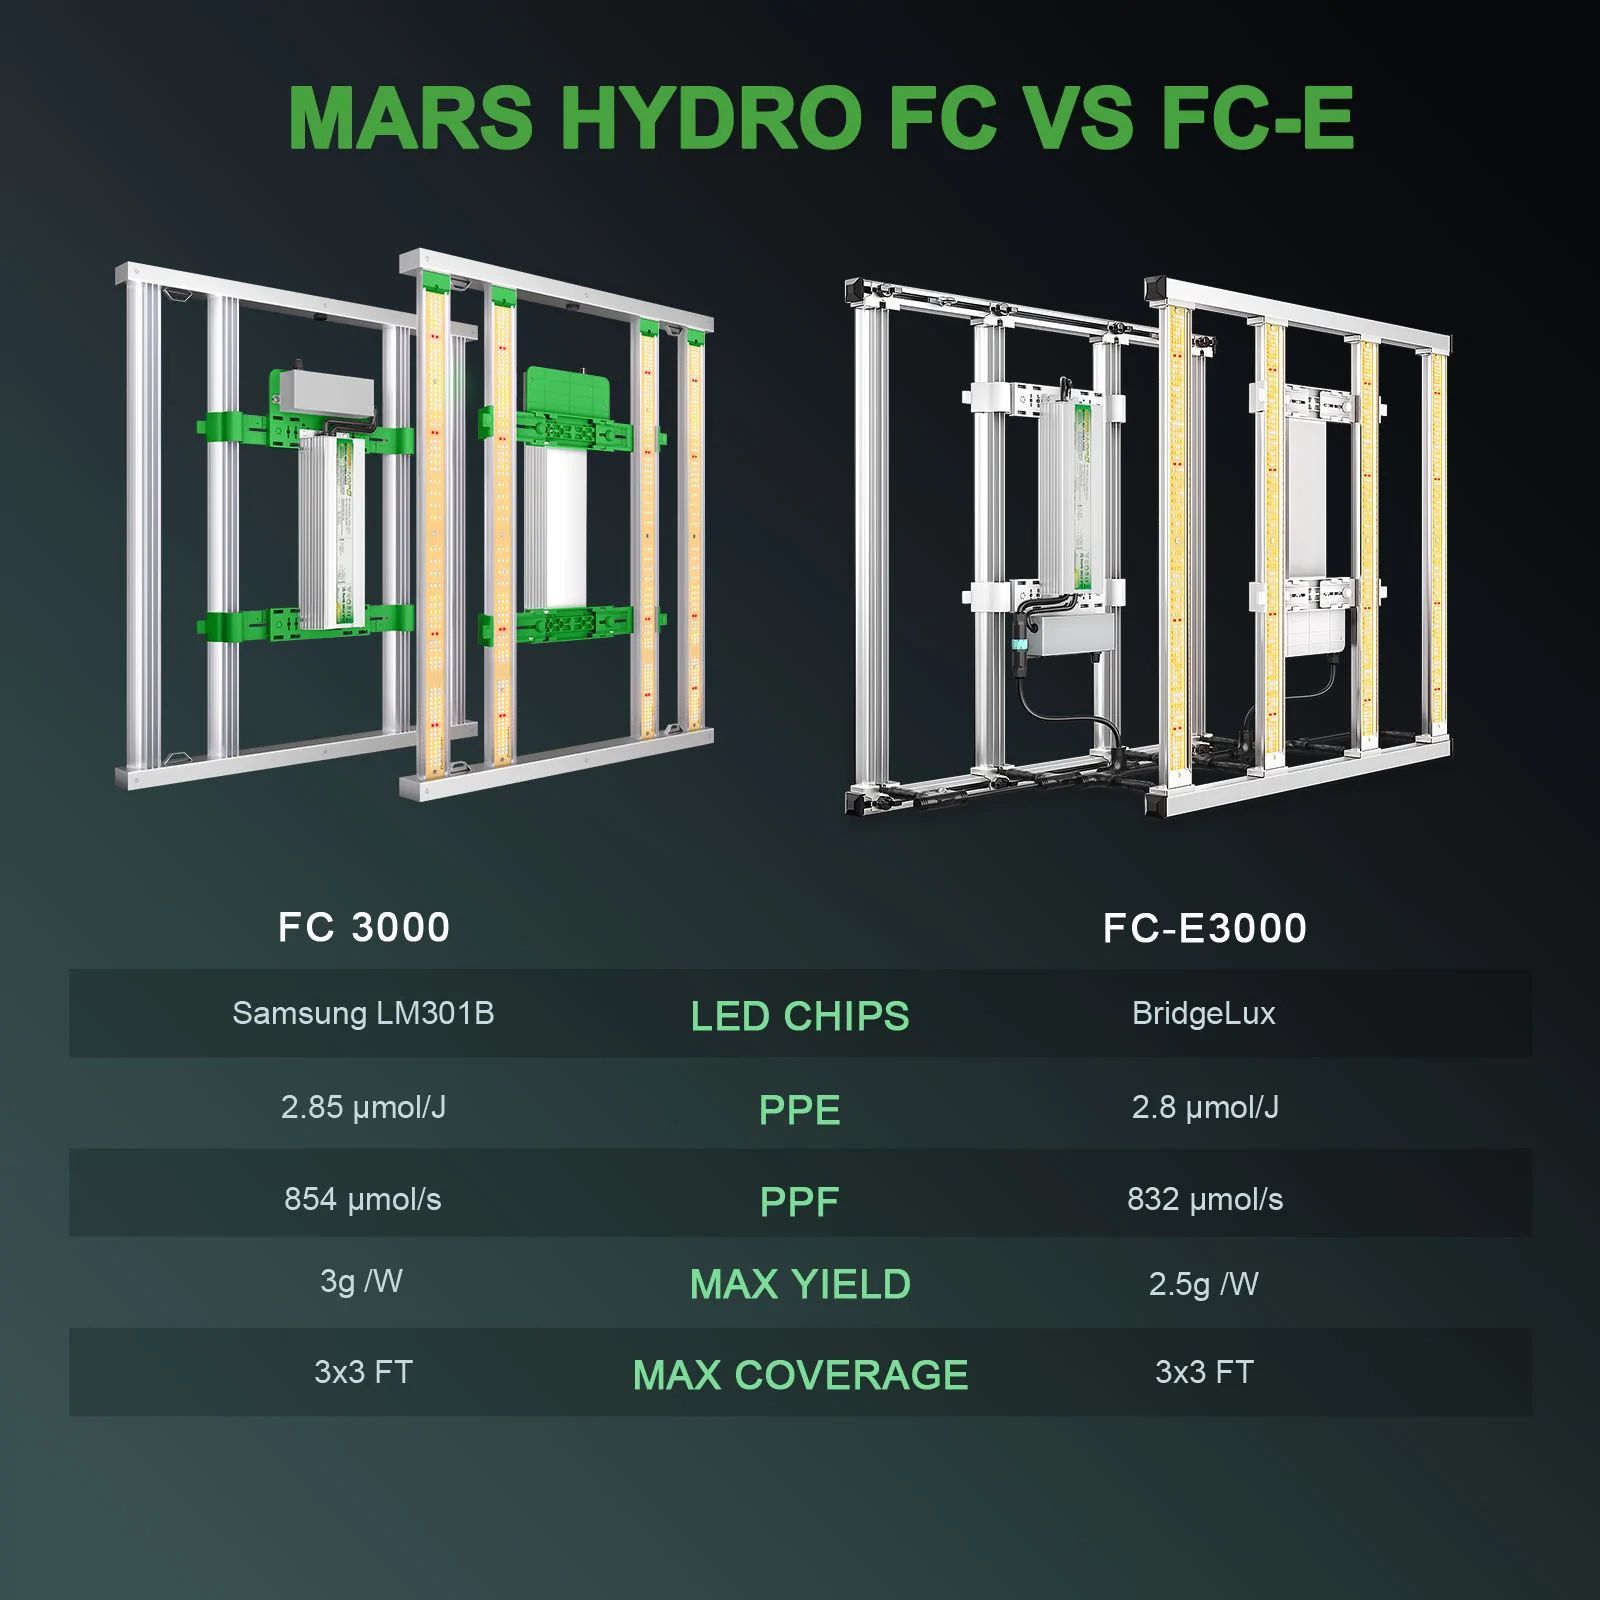 Mars Hydro 最新 FC-3000 植物育成LEDライト - 緑化企画 太陽 - メルカリ